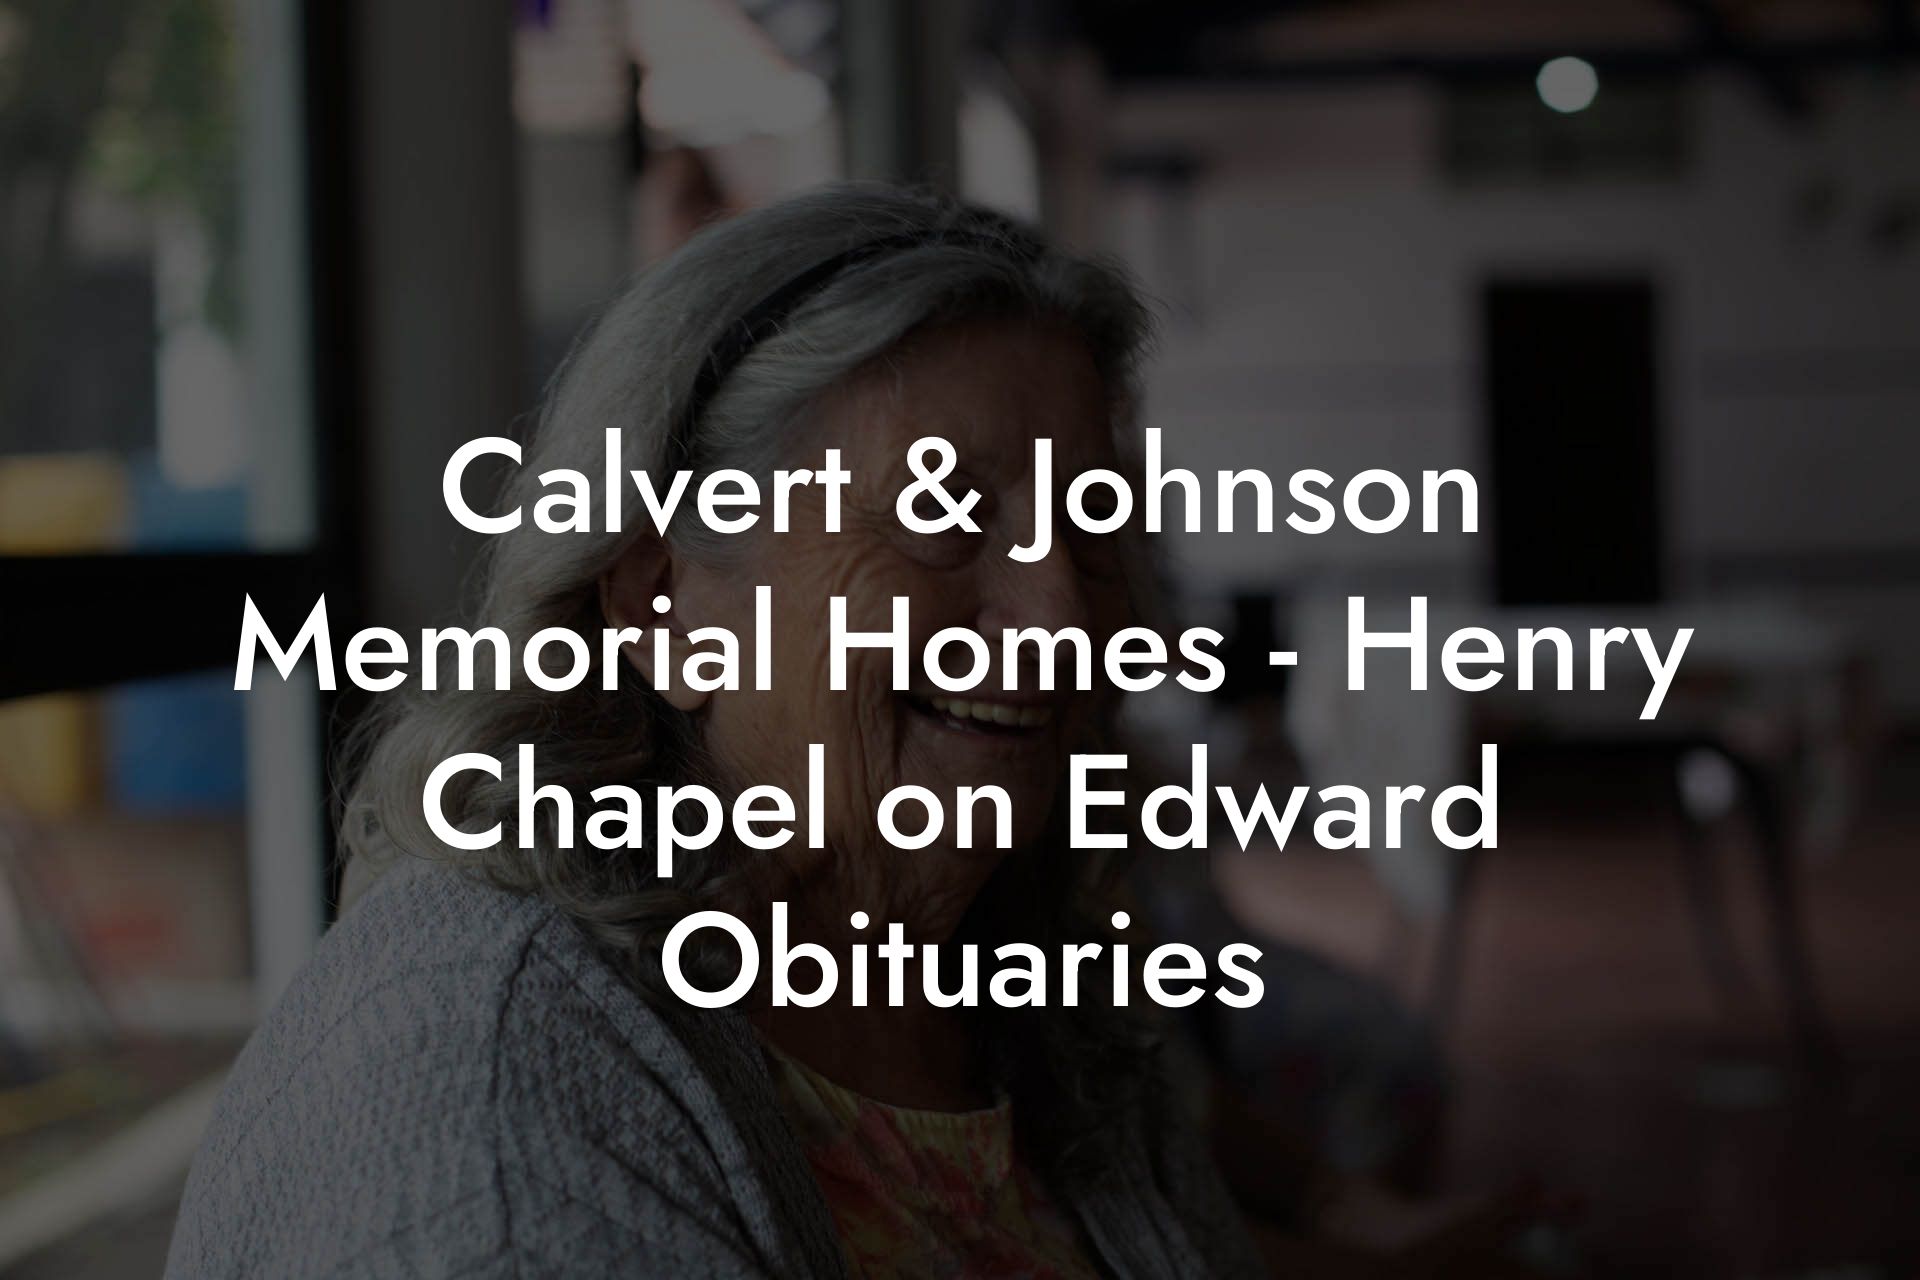 Calvert & Johnson Memorial Homes - Henry Chapel on Edward Obituaries